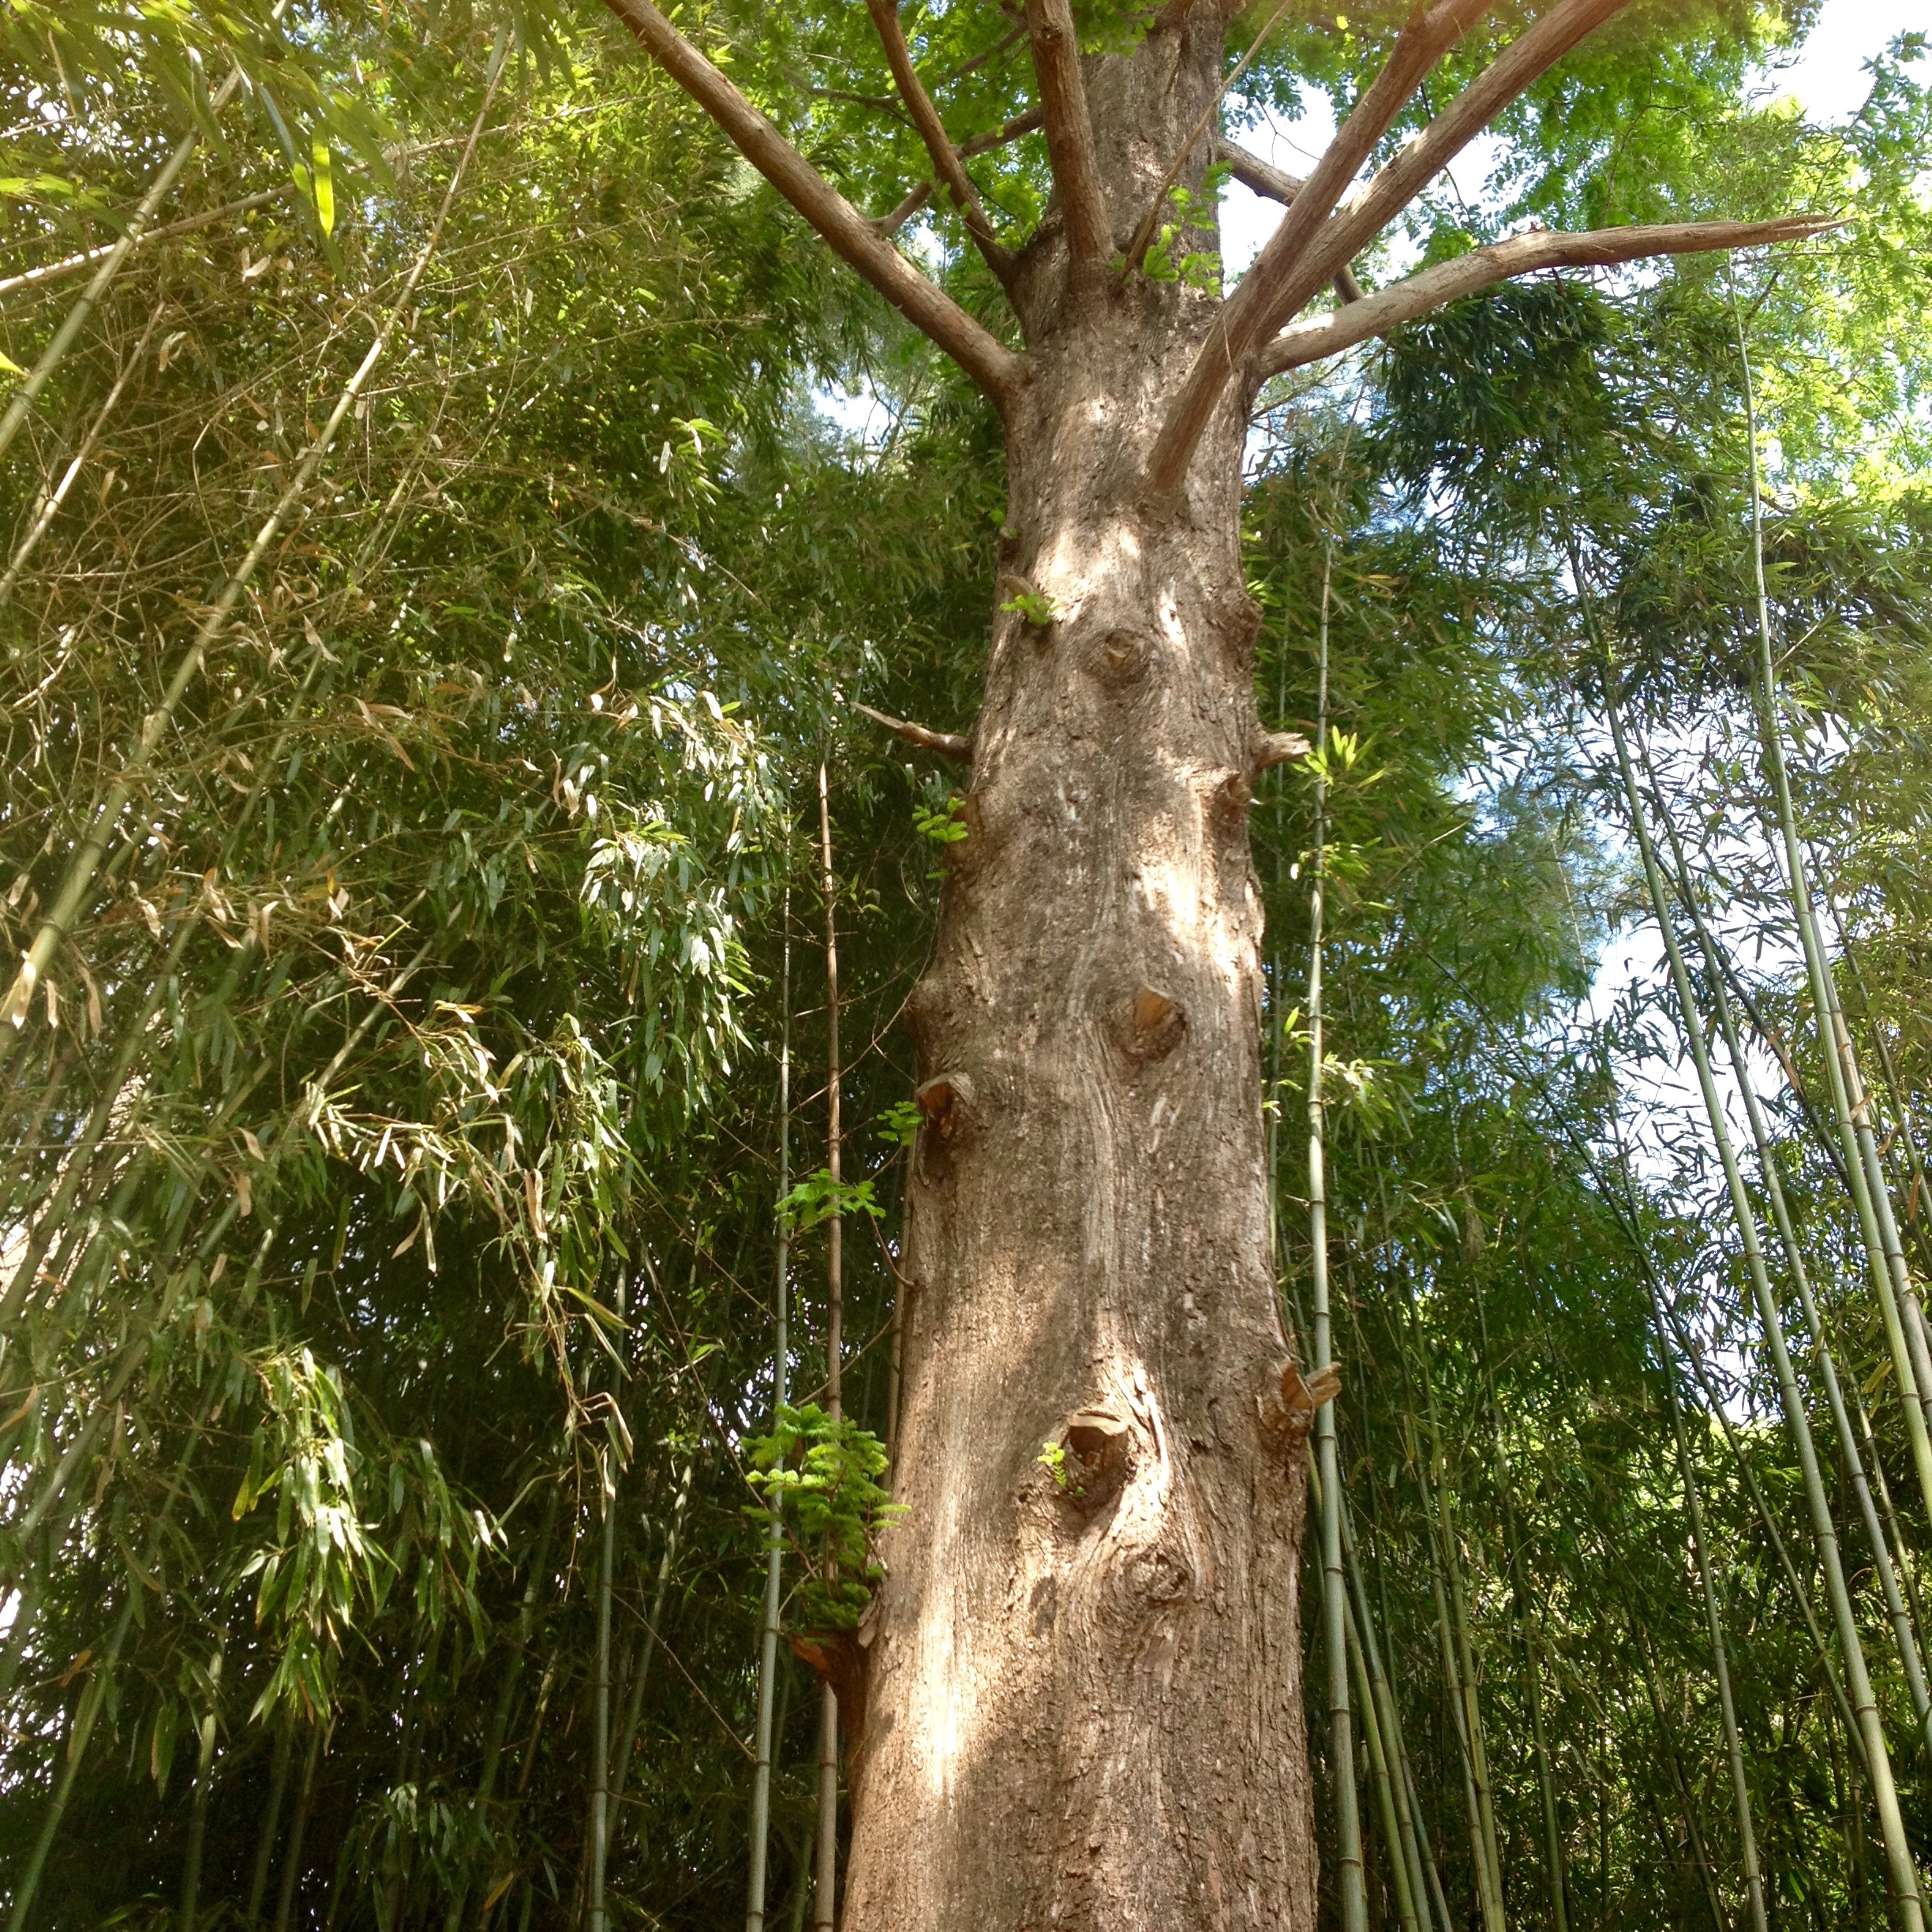 Dawn Redwood (Metasequoia glyptostroboides)